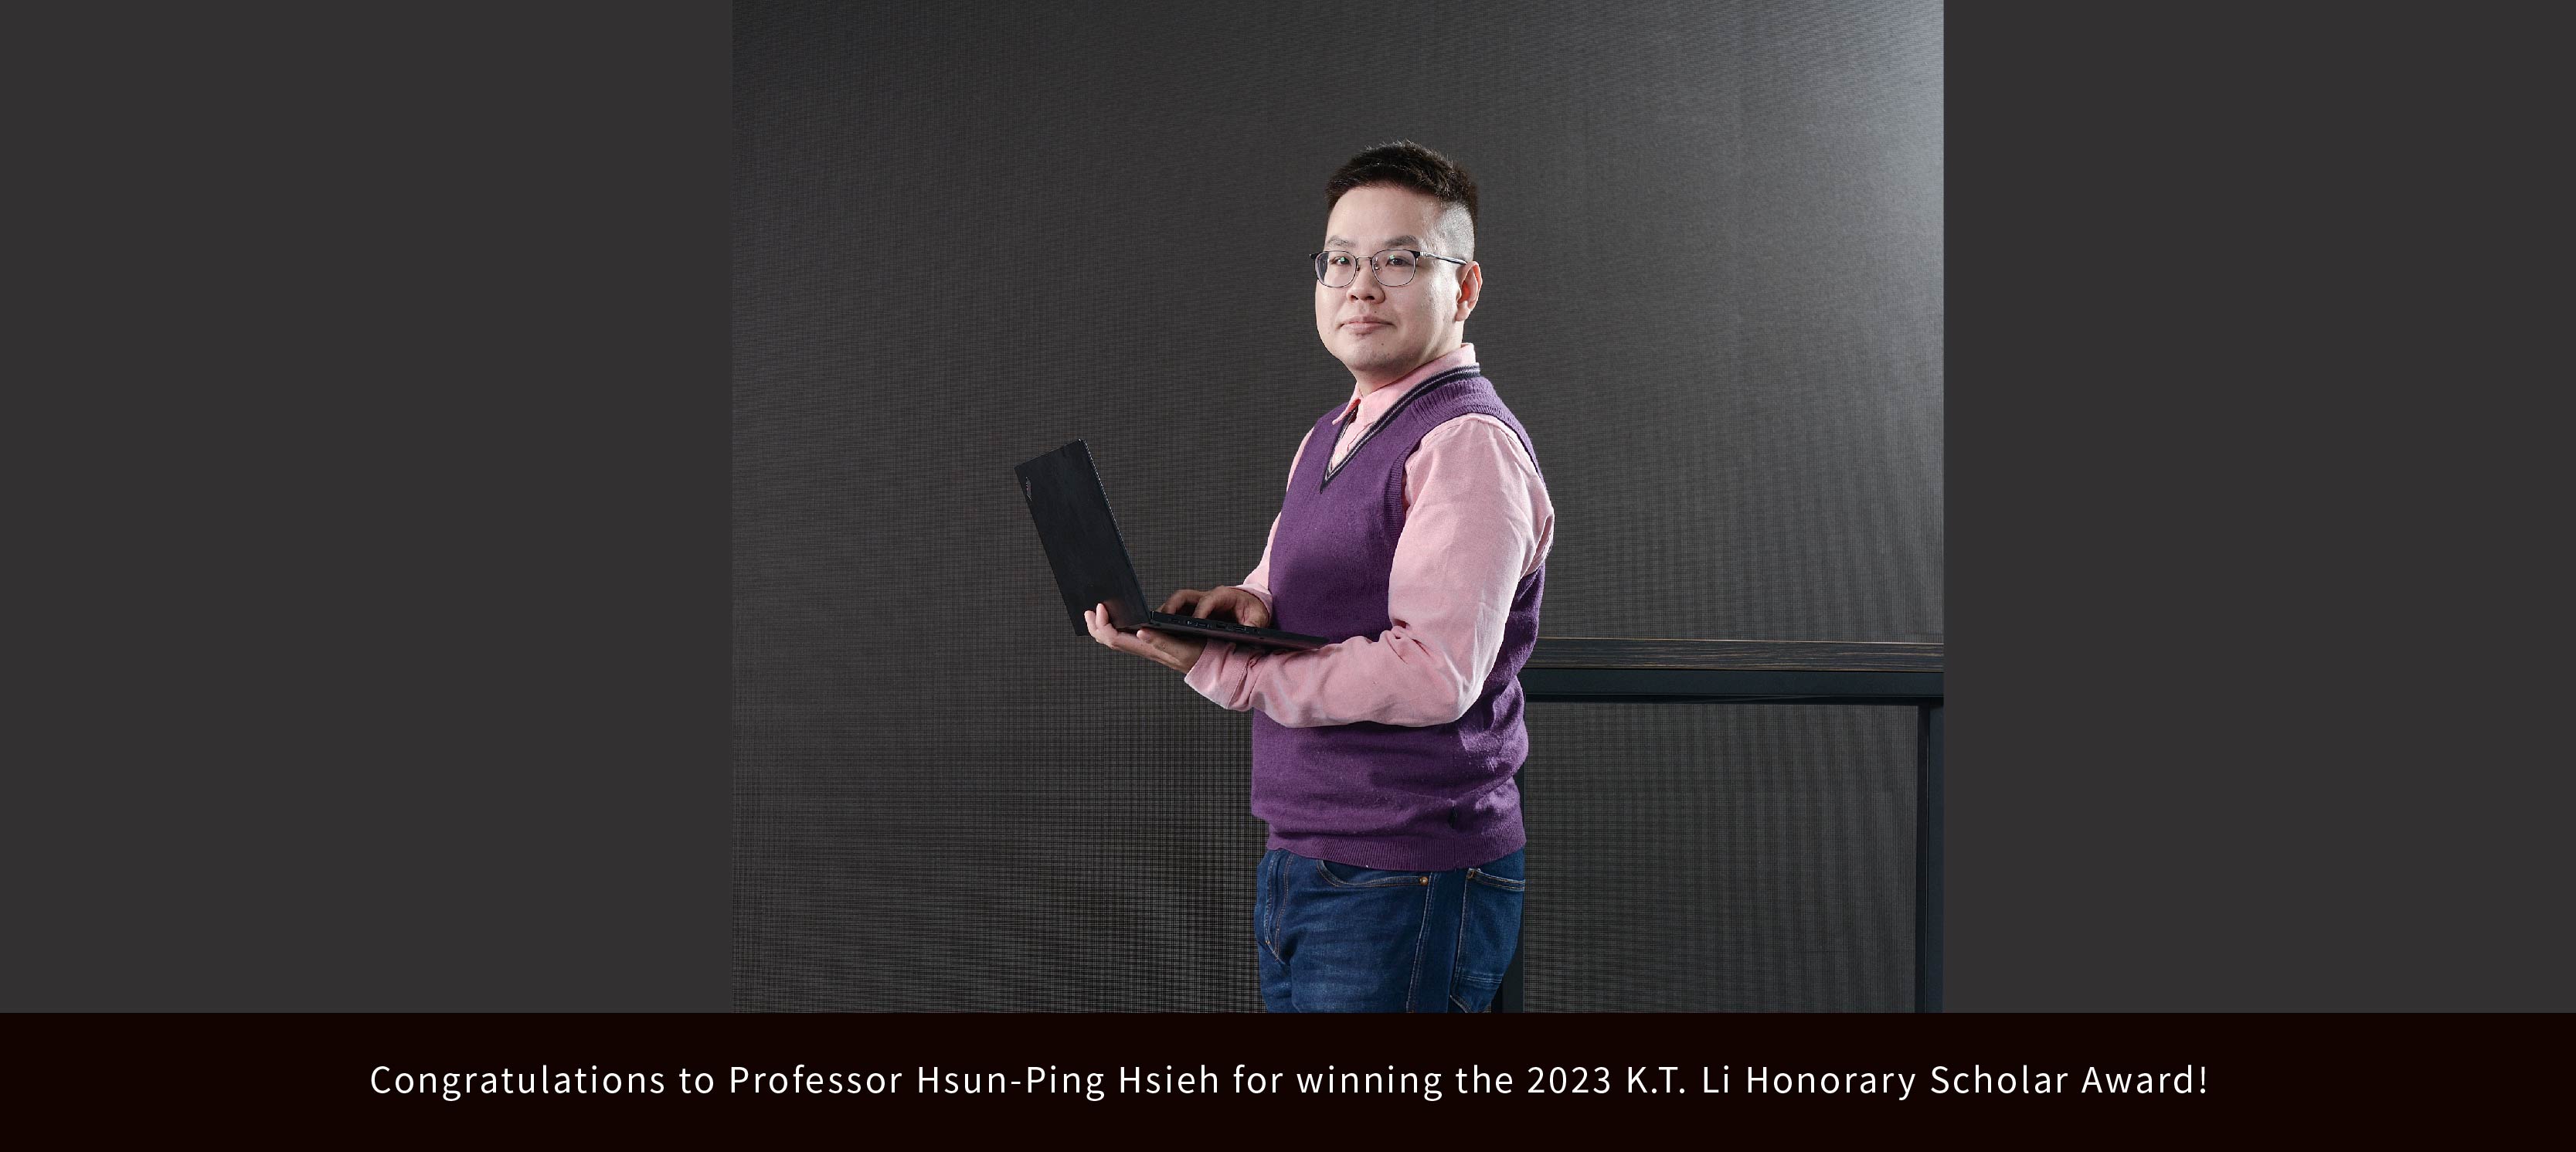 Congratulations to Professor Hsun-Ping Hsieh for winning the 2023 K.T. Li Honorary Scholar Award!